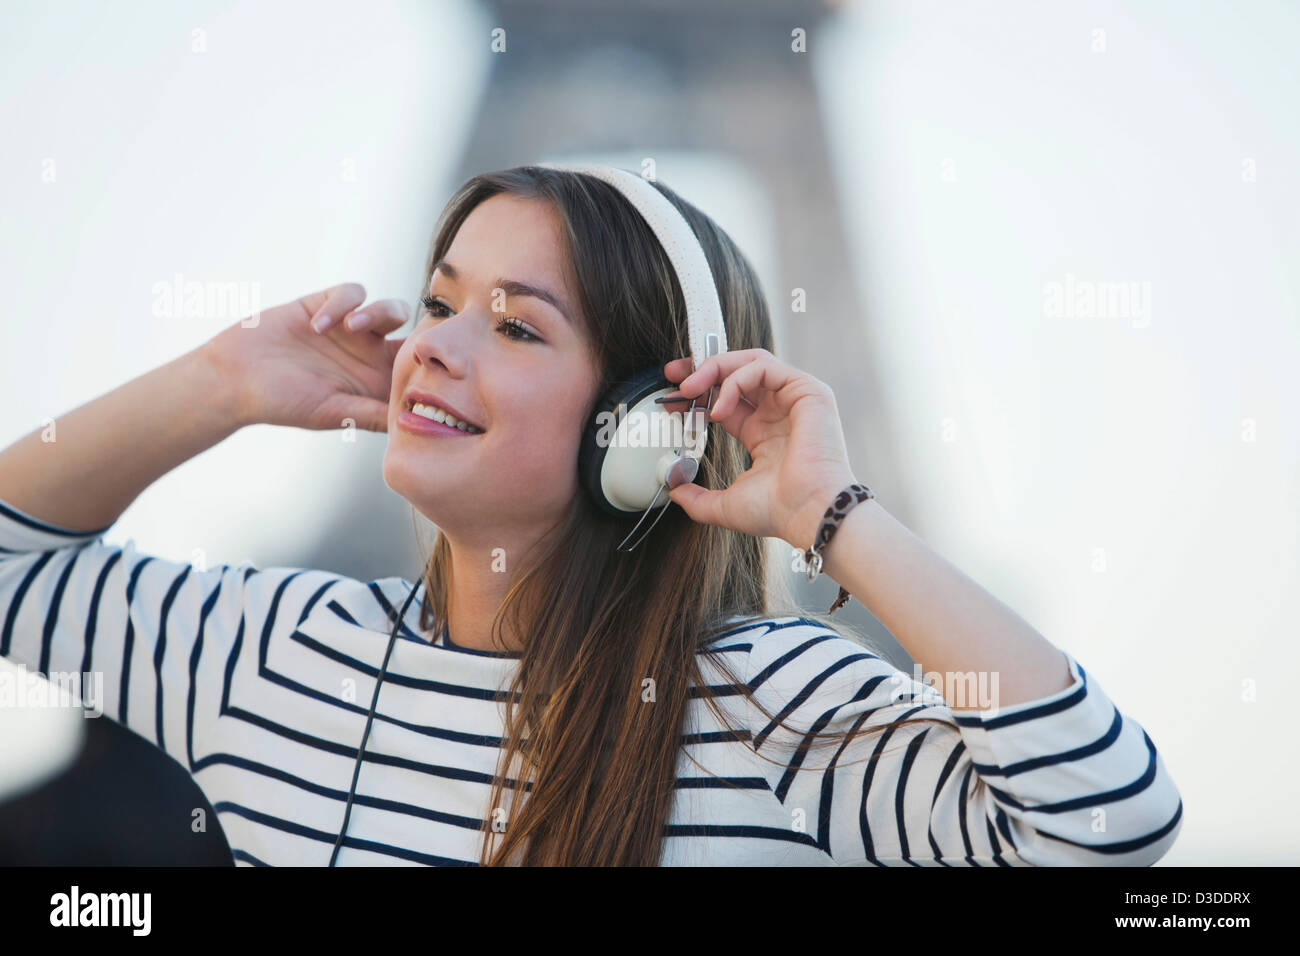 Woman listening to music on headphones Stock Photo